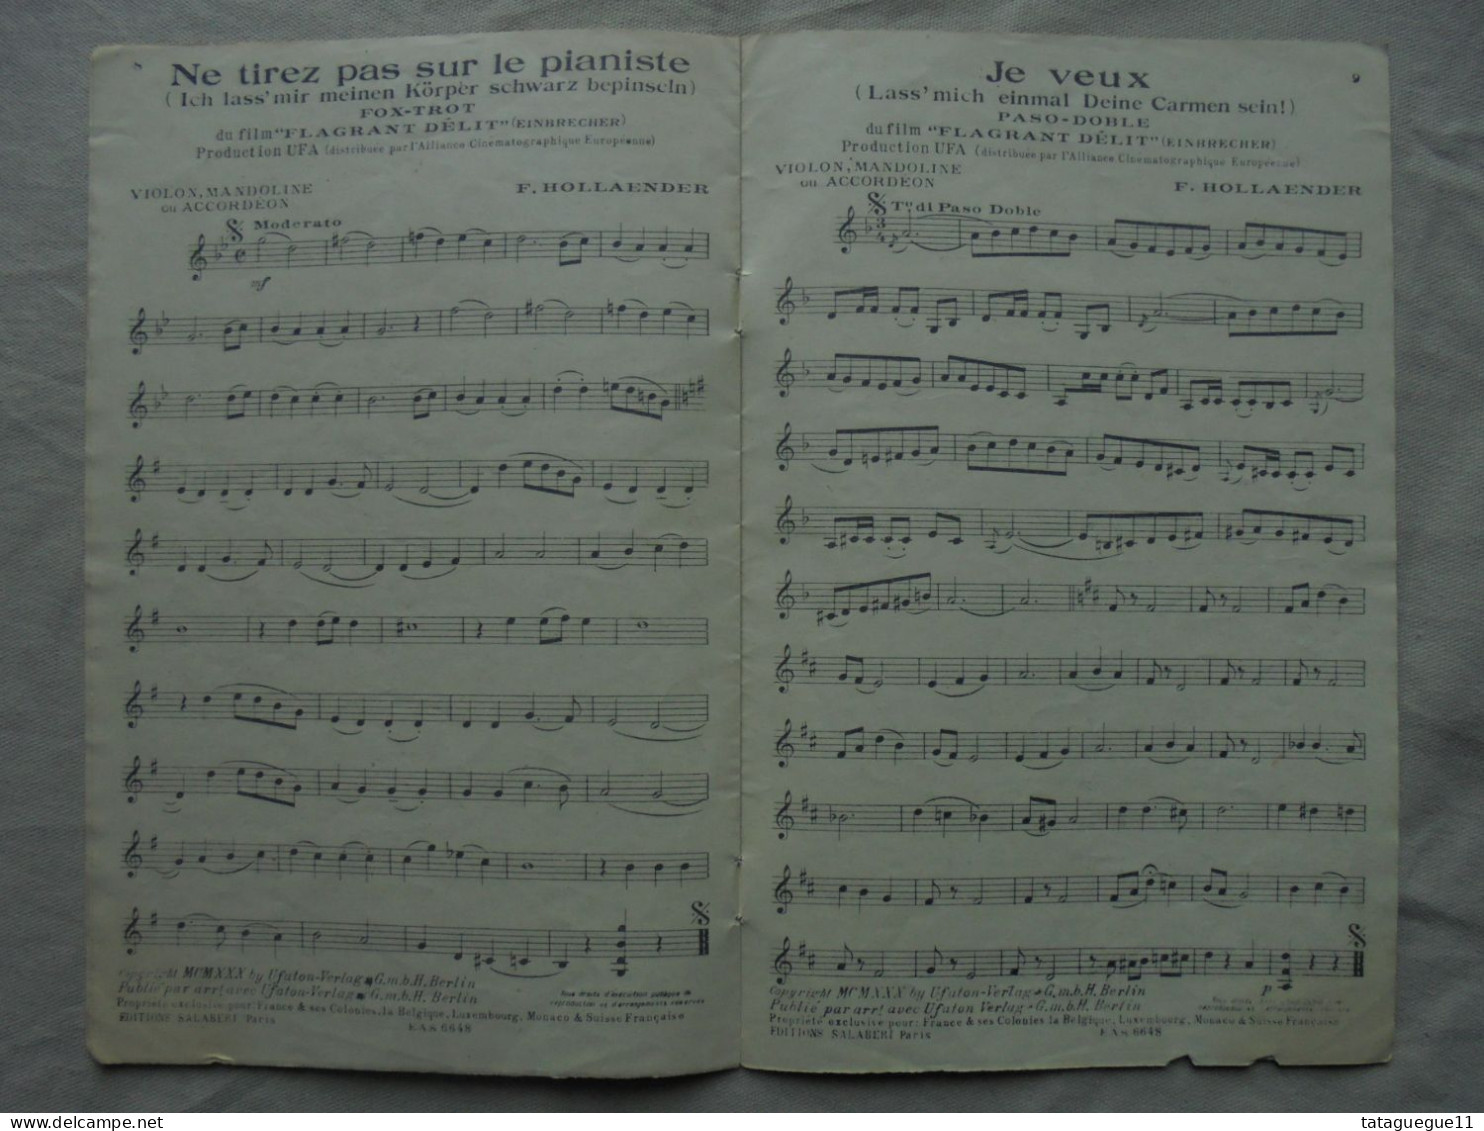 Ancien - Partitions 52e Recueil Salabert 10 Titres 1930 - Song Books